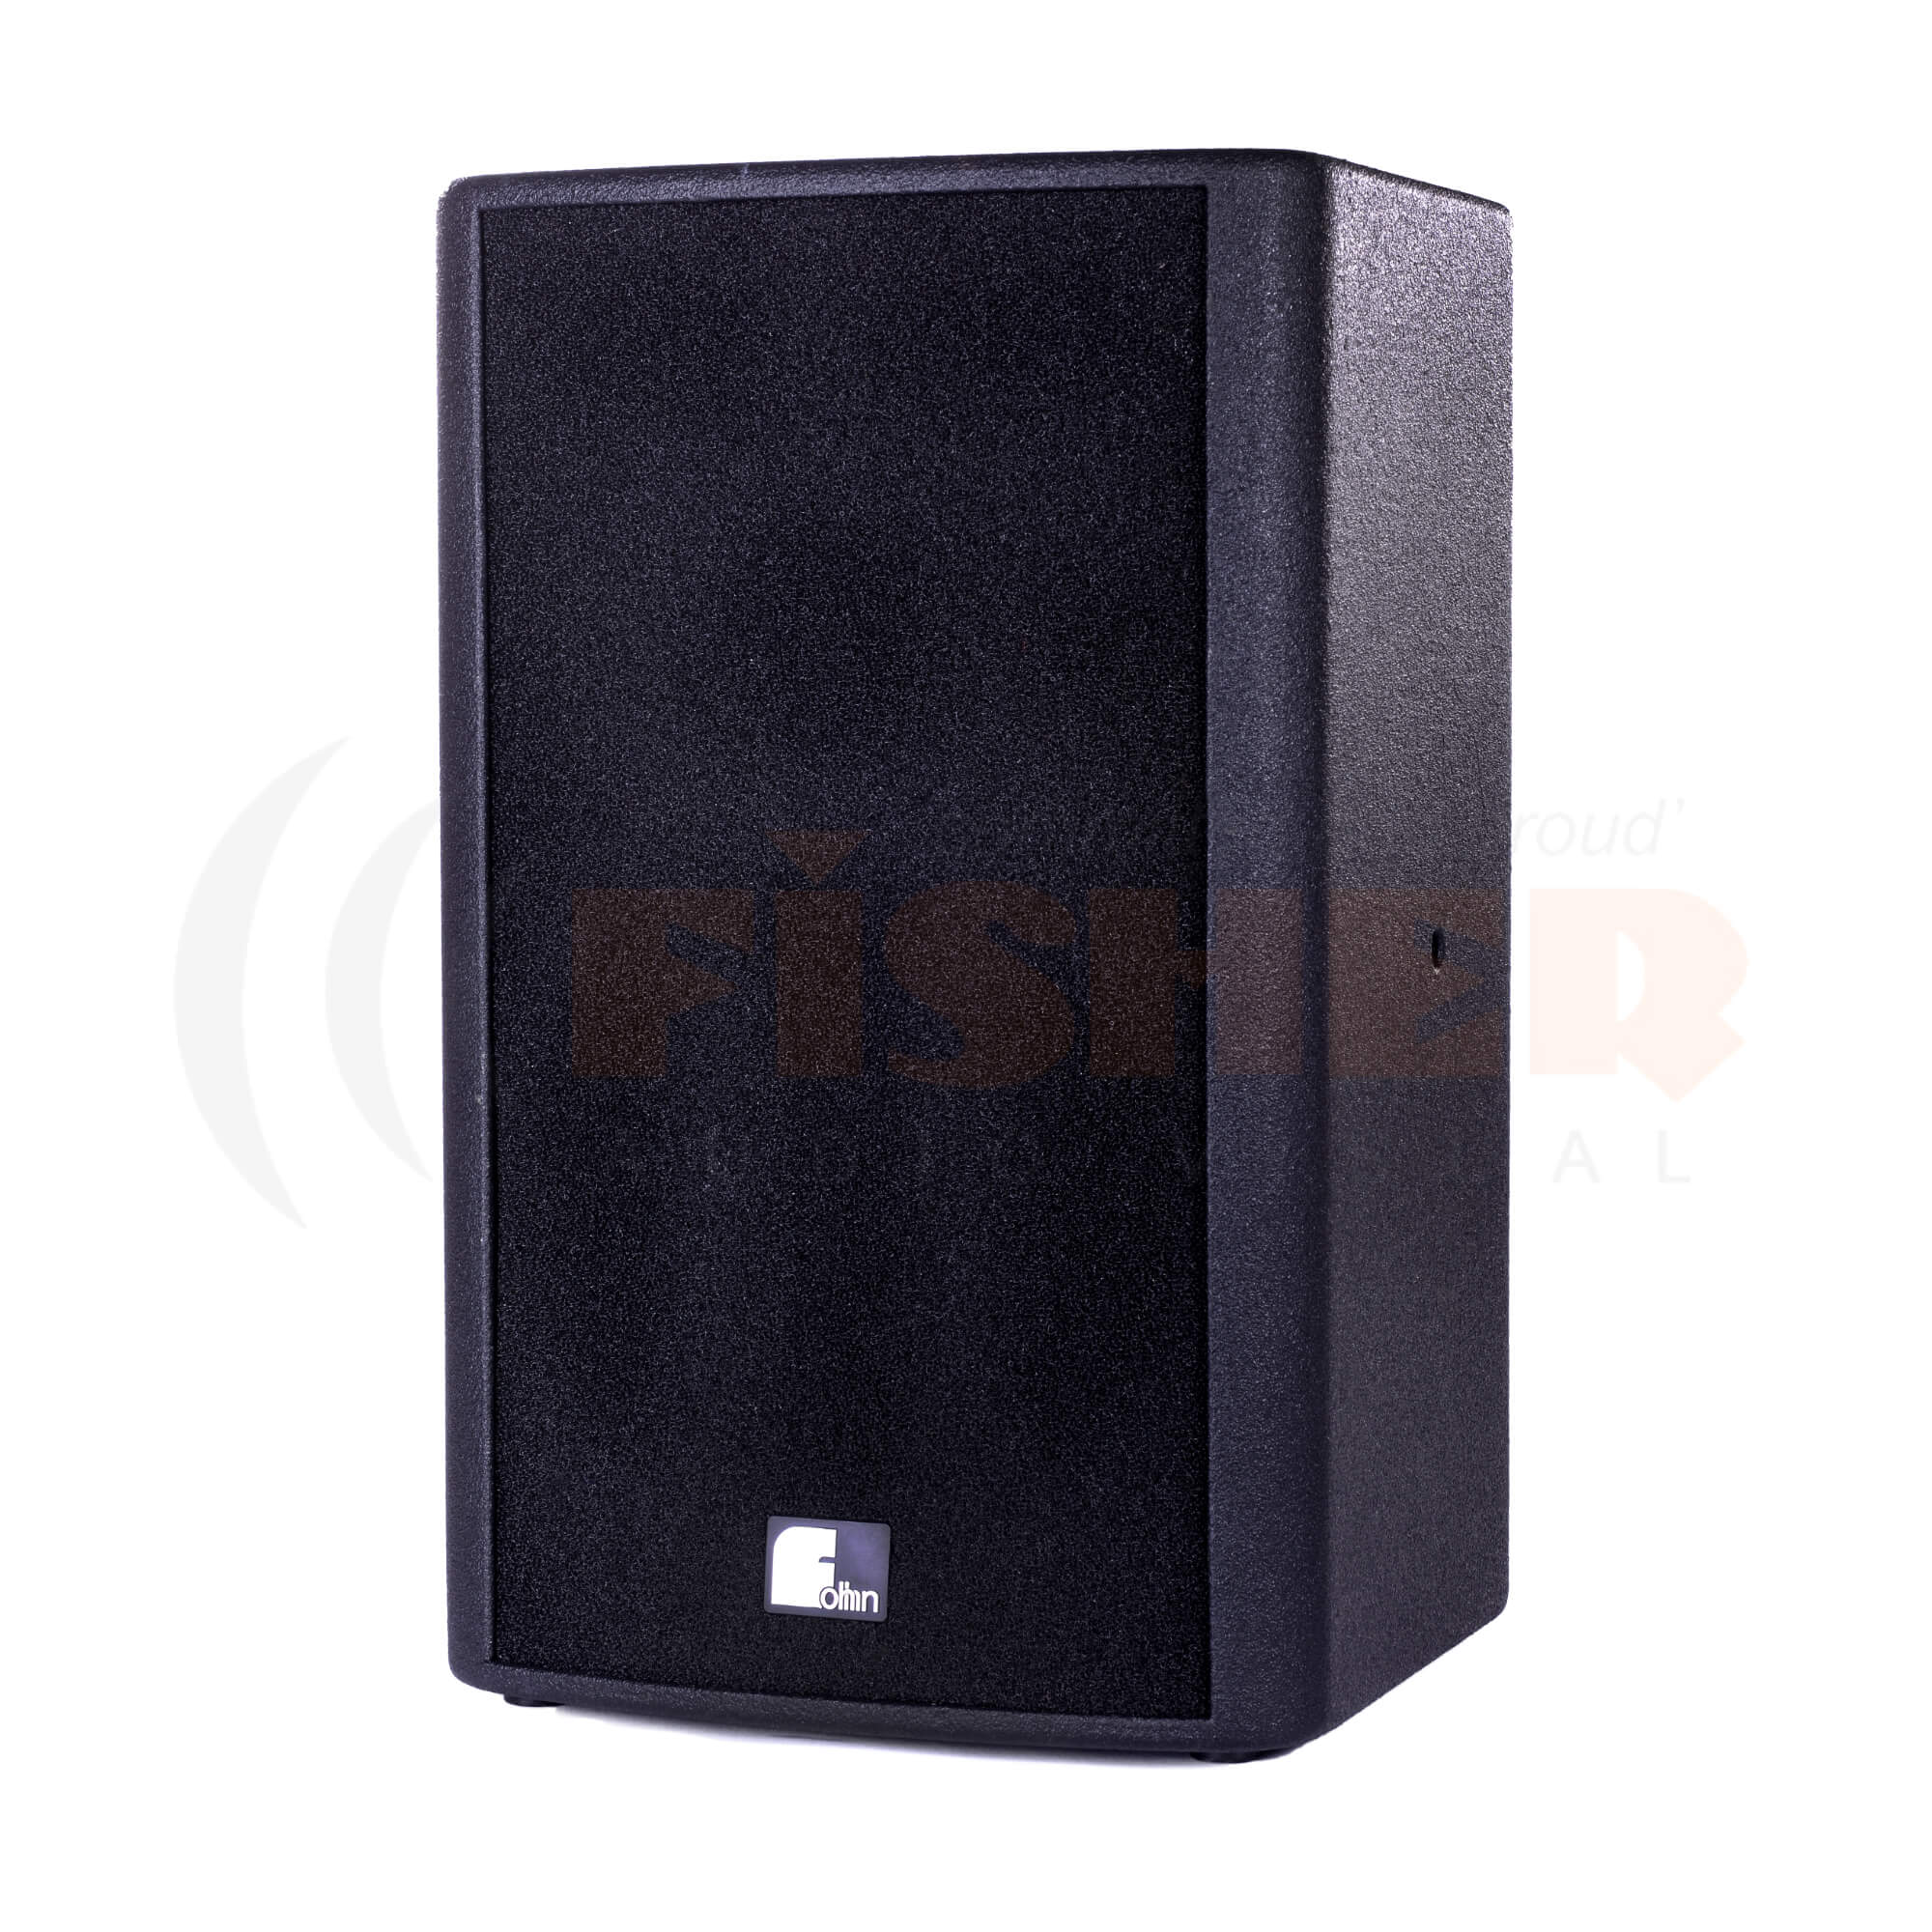 Fohhn Powered Speaker FP1 CD - Fisher Audio Visual